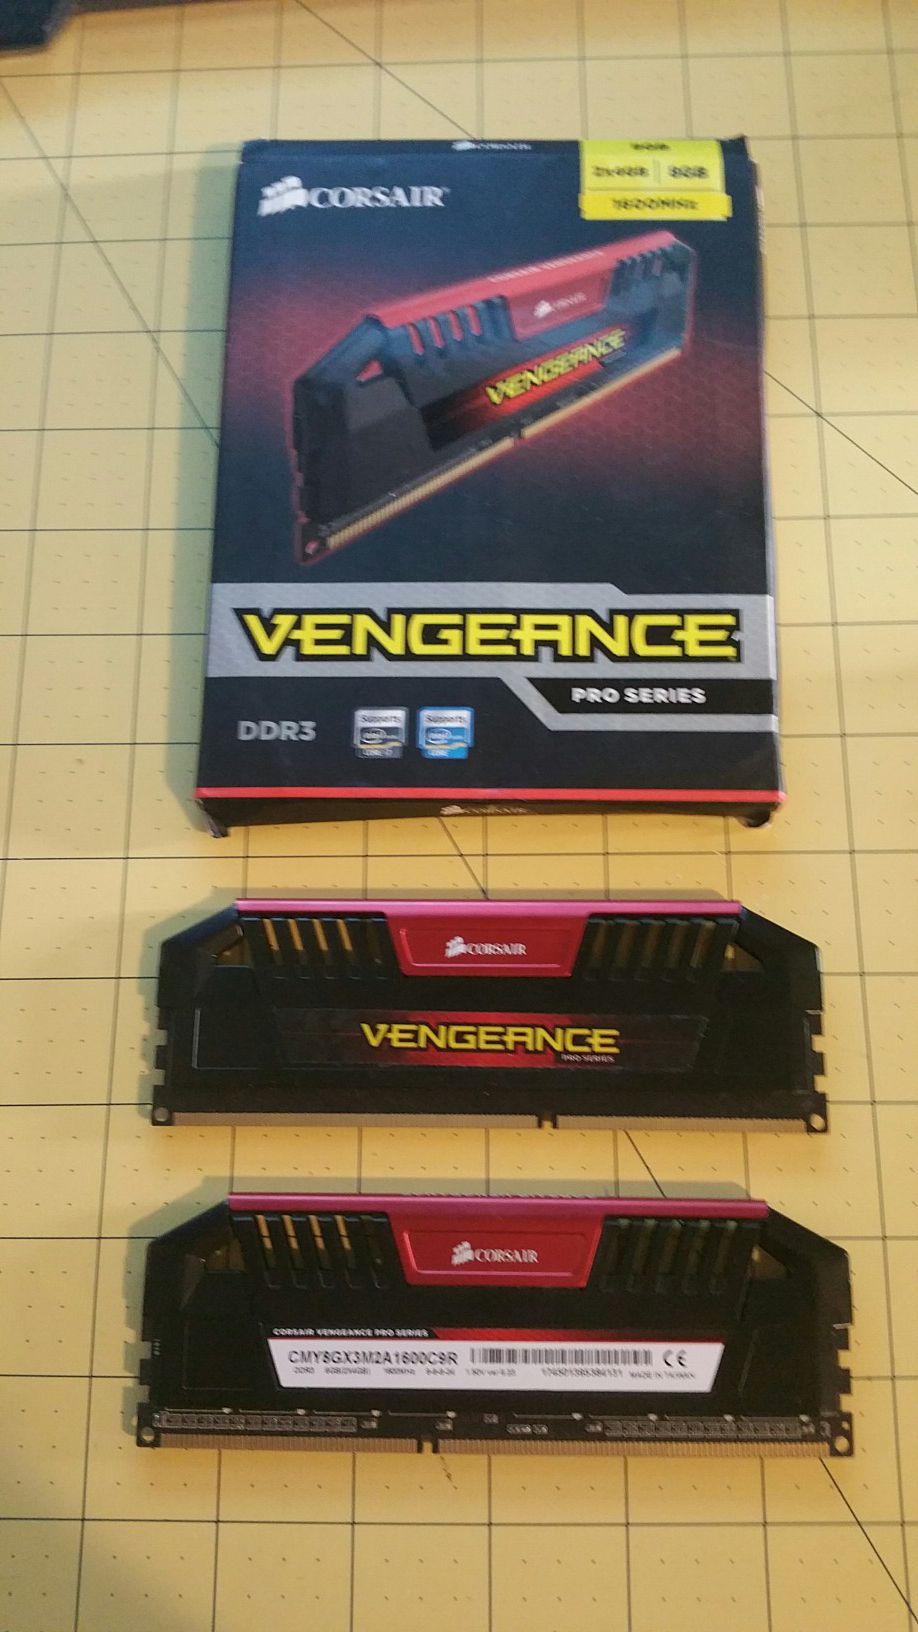 8gb CORSAIR VENGEANCE PRO DDR3 RAM